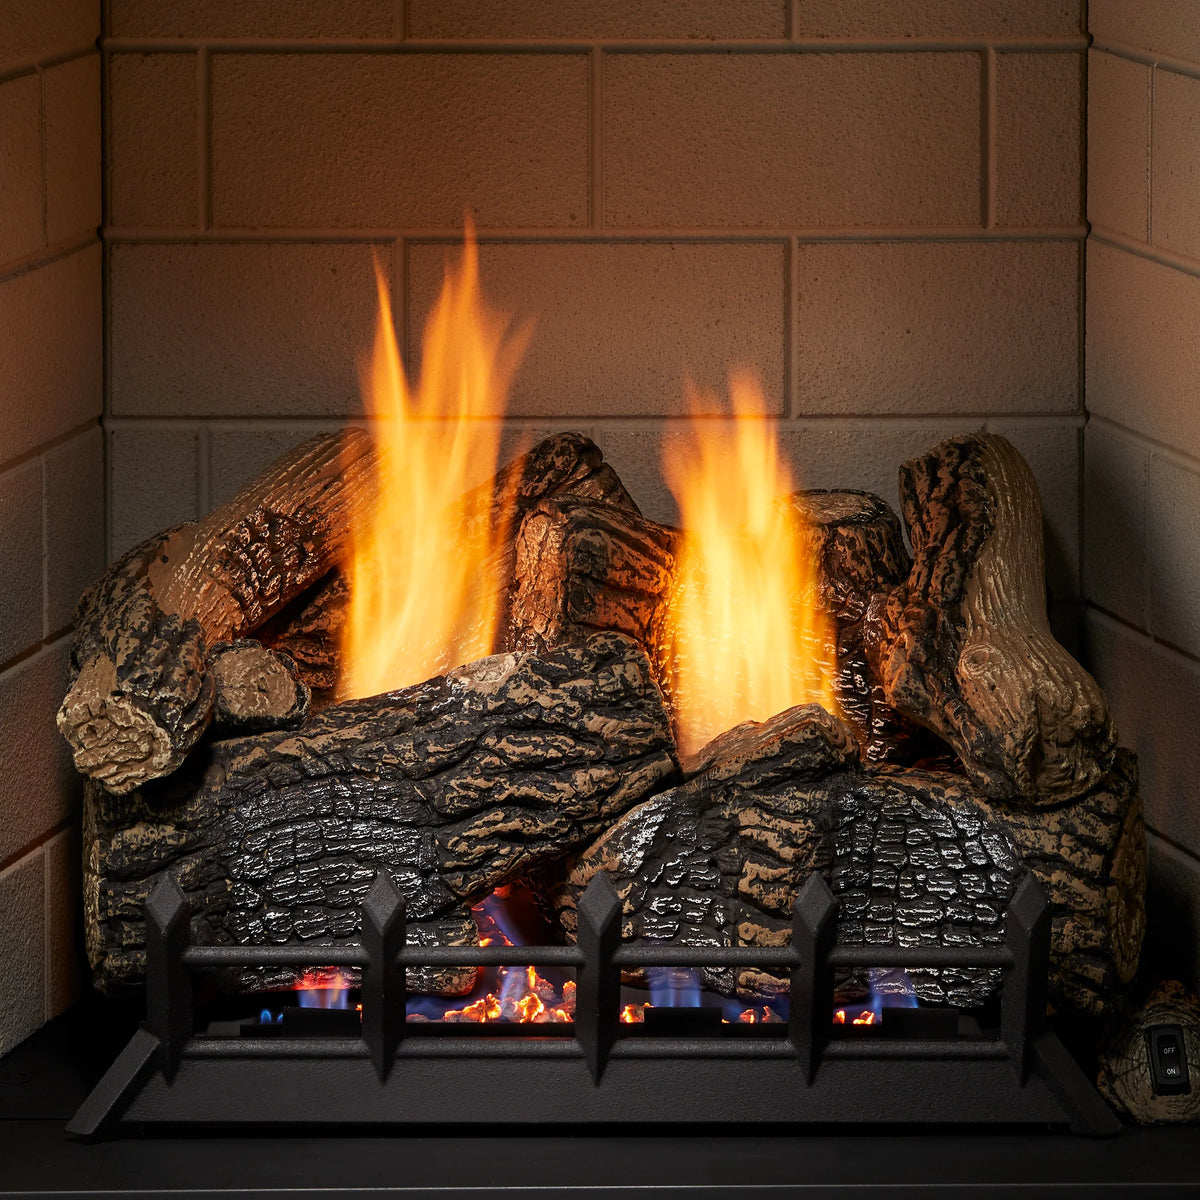 Monessen BUF42 Vent-Free Gas Fireplace Insert